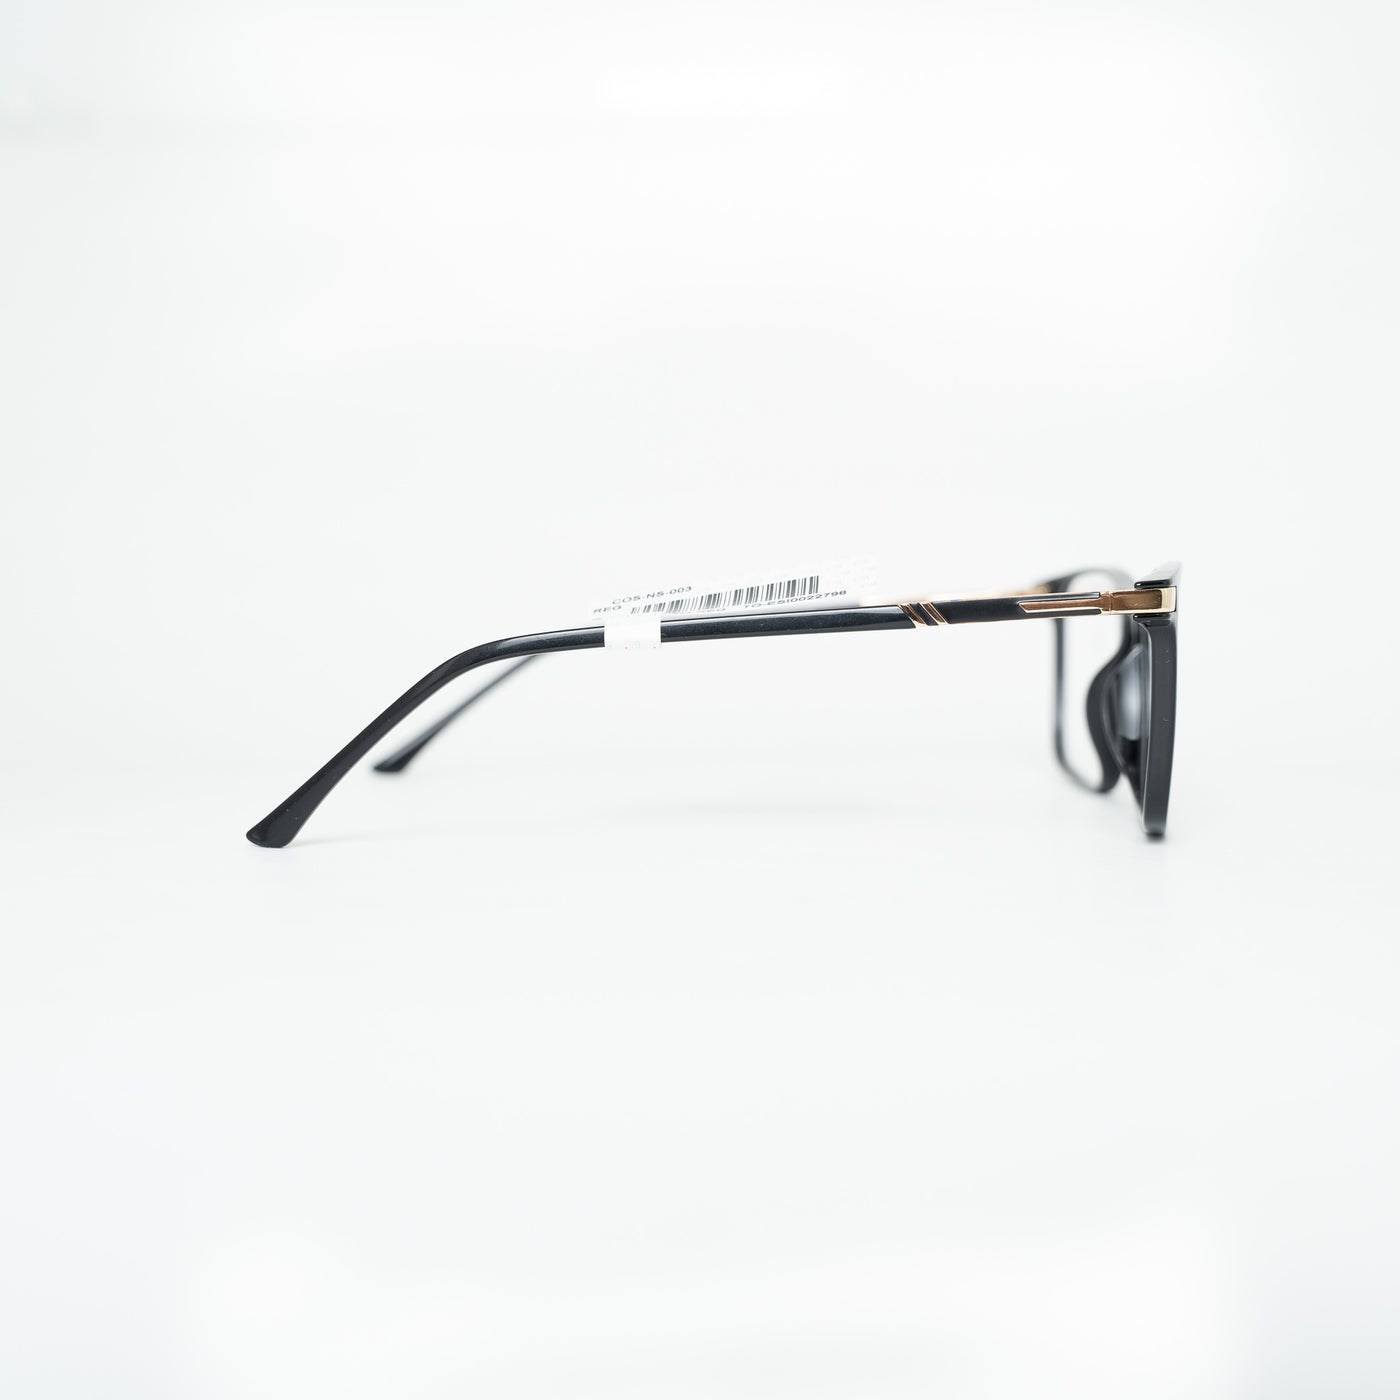 Tony Morgan TM0904GOLD54 | Eyeglasses - Vision Express Optical Philippines